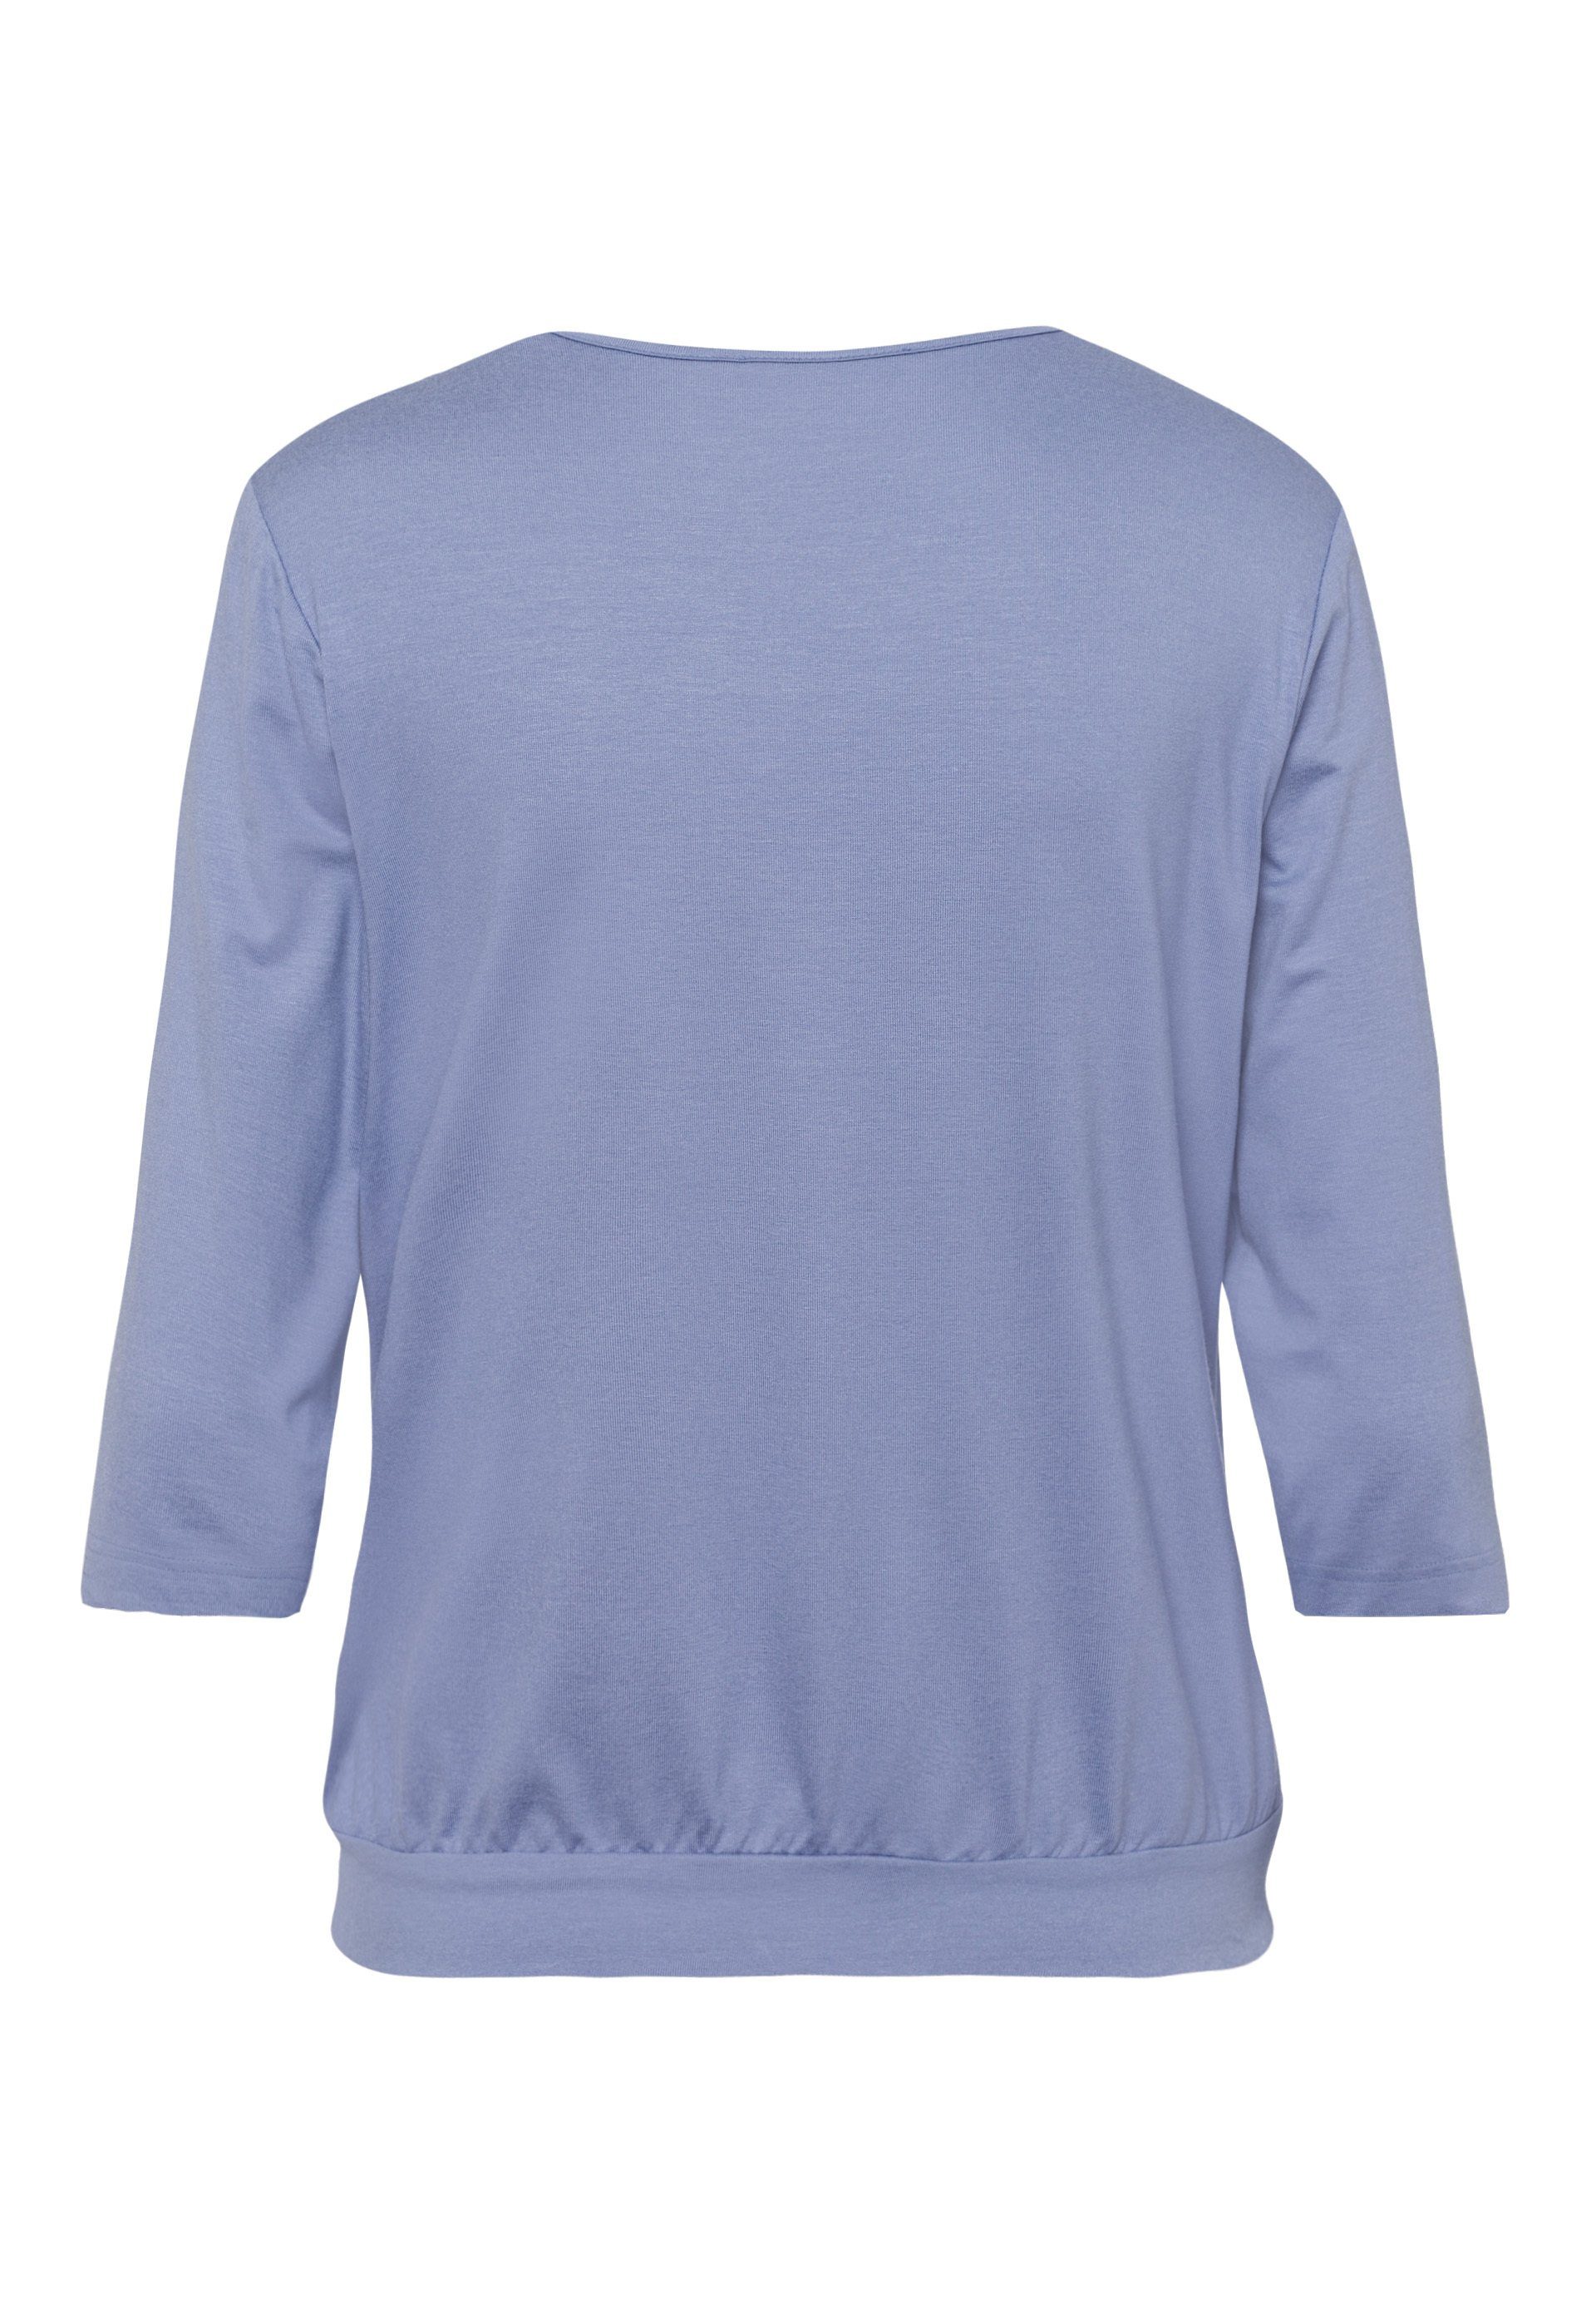 WALDER Blusenshirt dusty blue NOS FRANK Blusenshirt